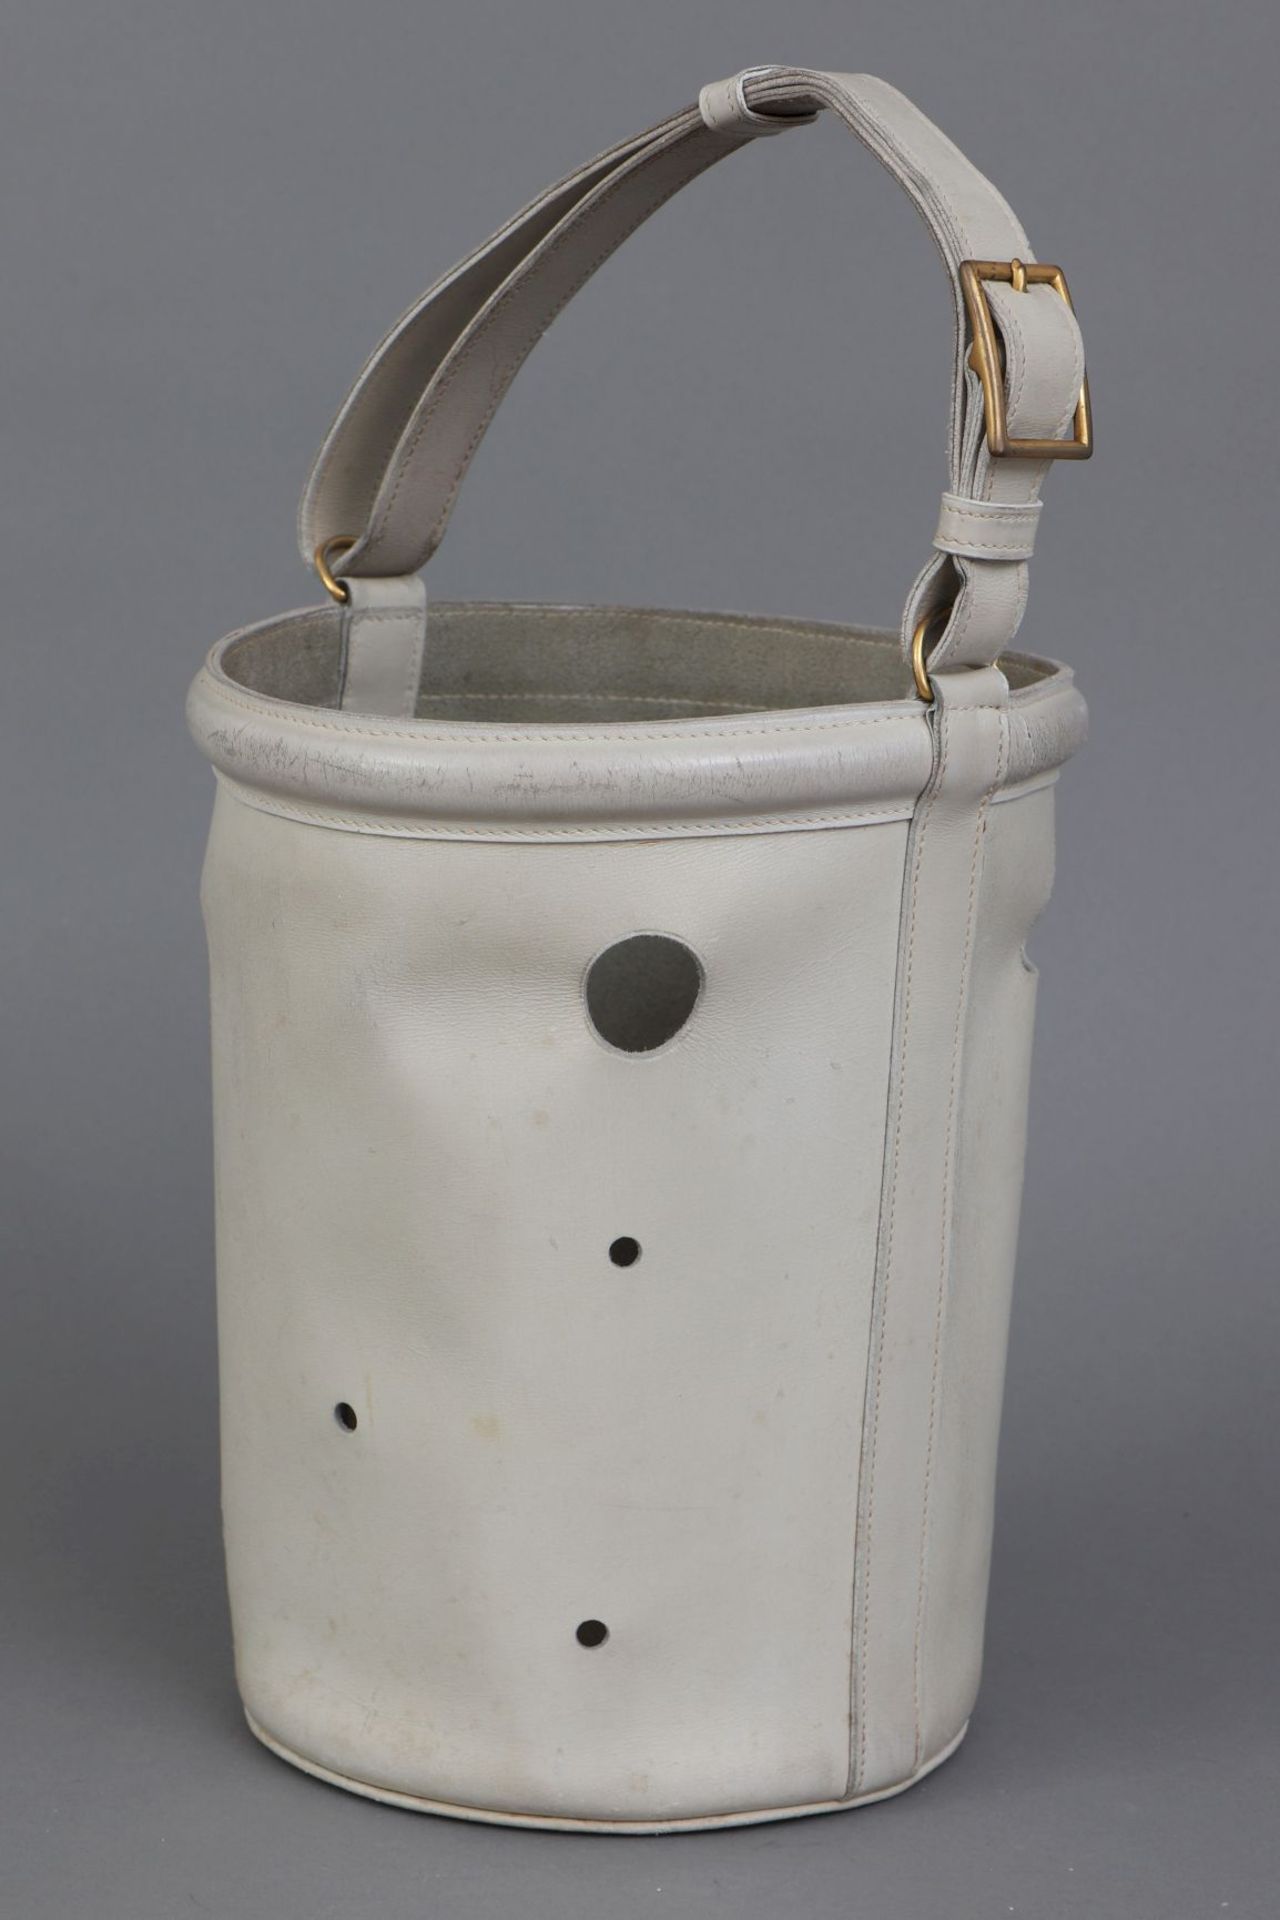 HERMES vintage Handtasche, Mangeoire - Image 2 of 5